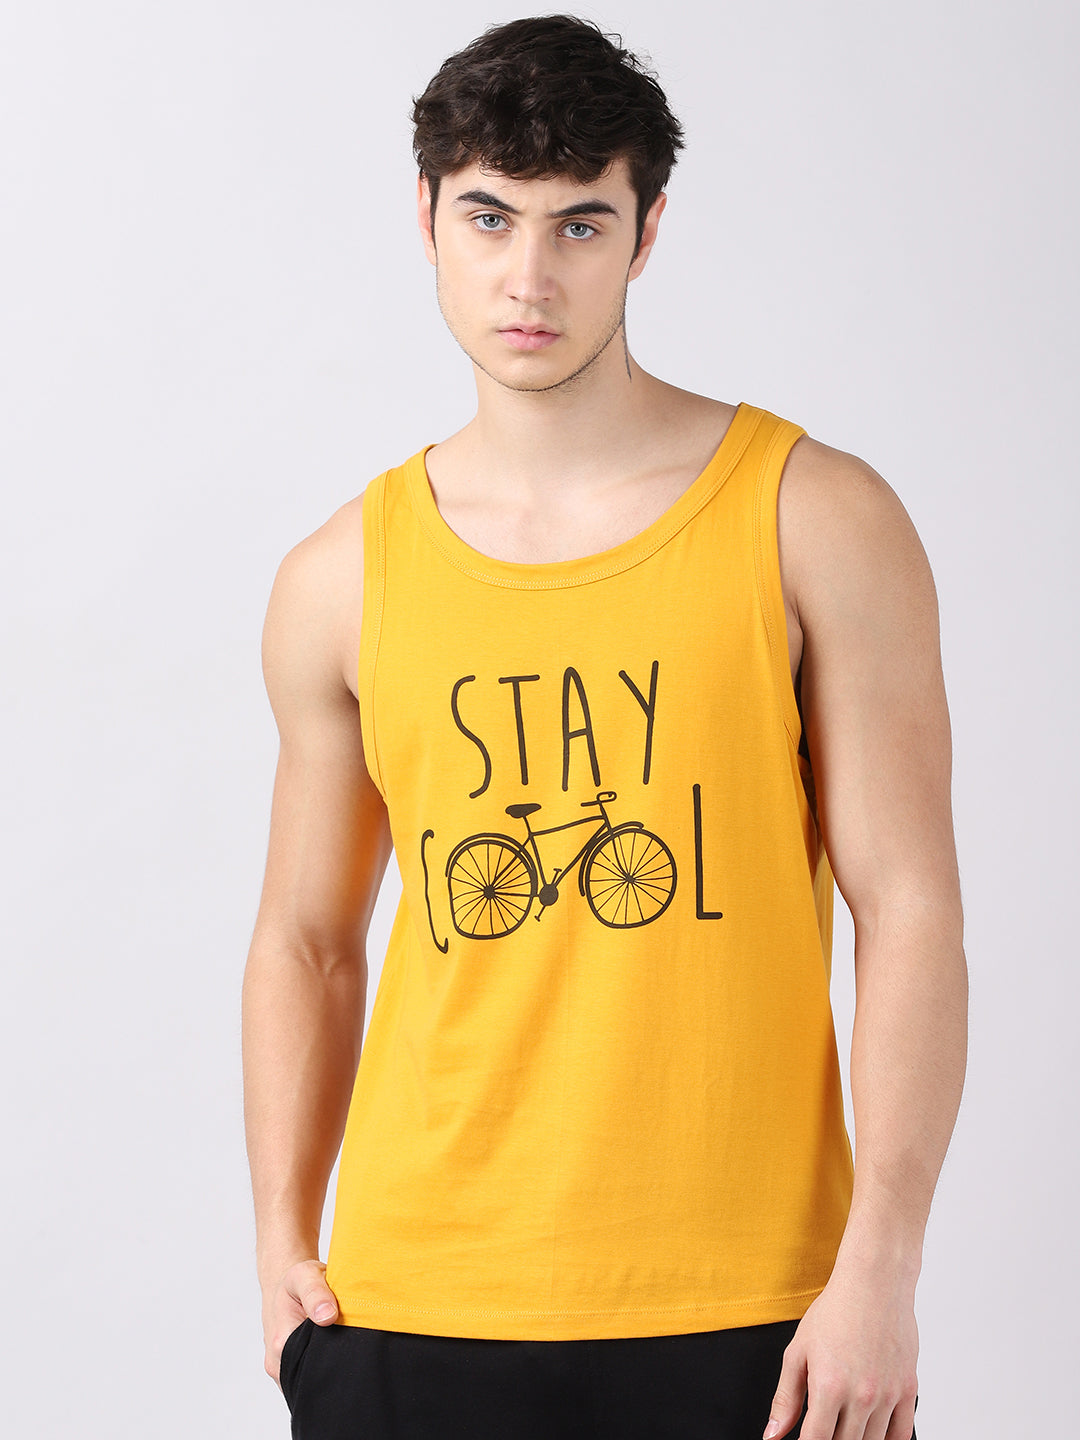 Stay Cool Sleeveless T-Shirt Vest Bushirt   